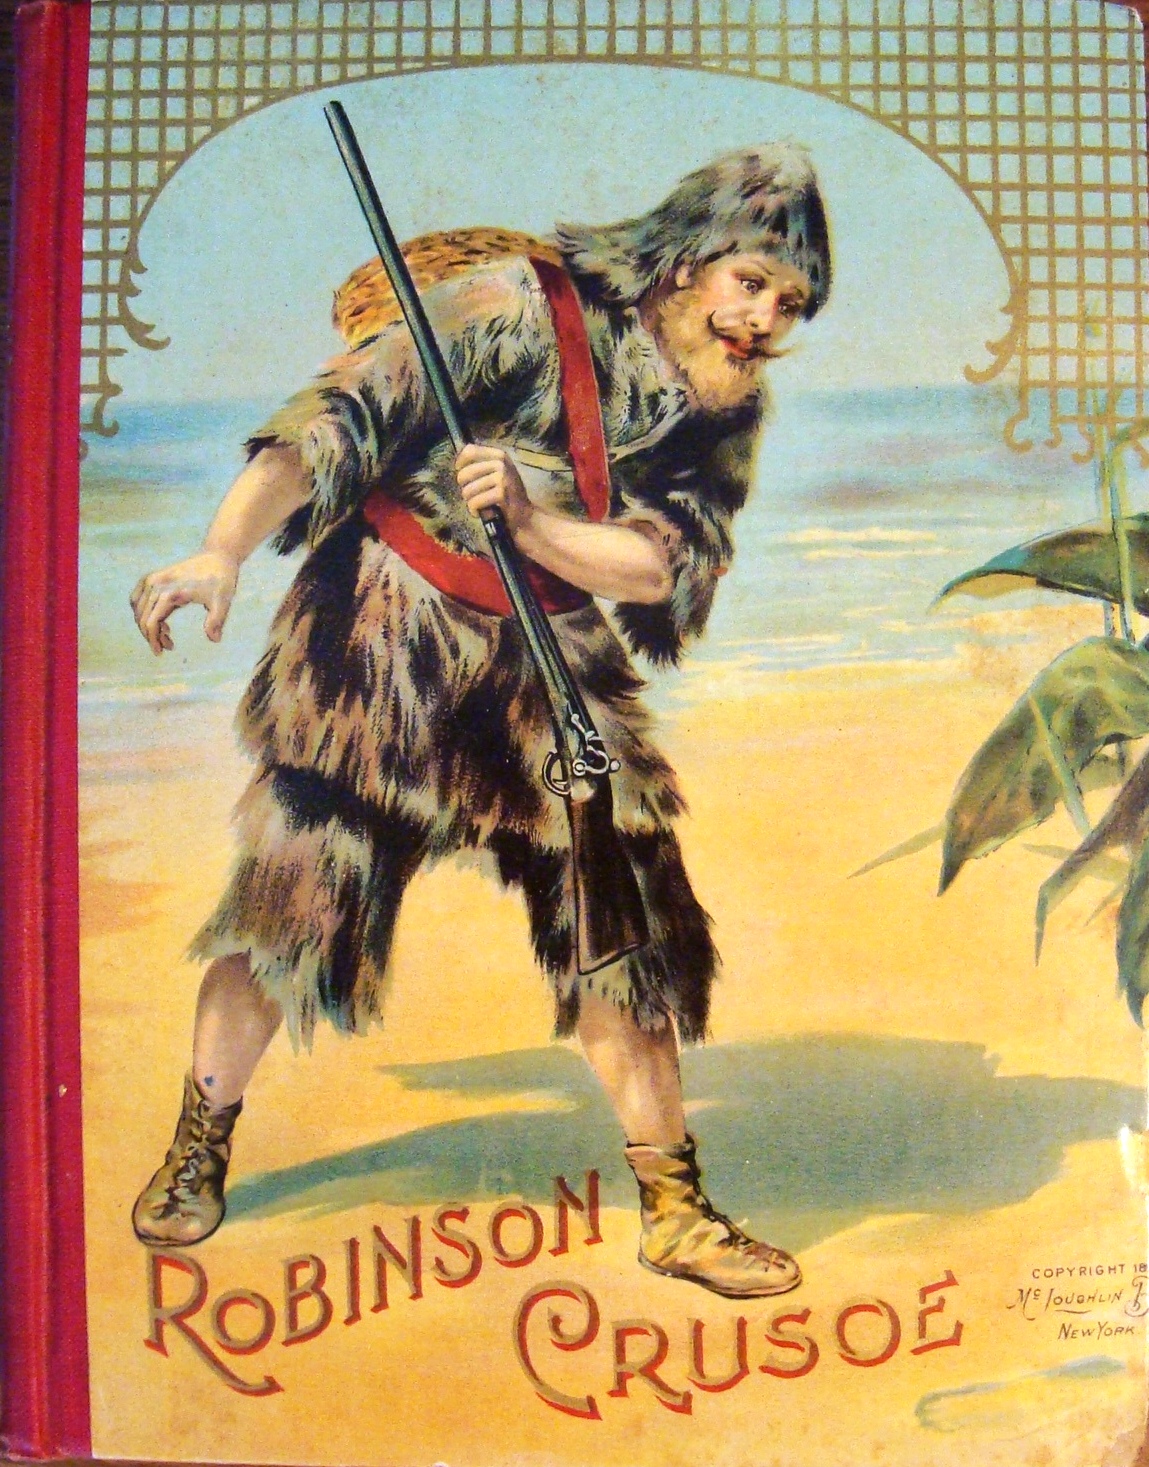 Robinson Crusoe Summary